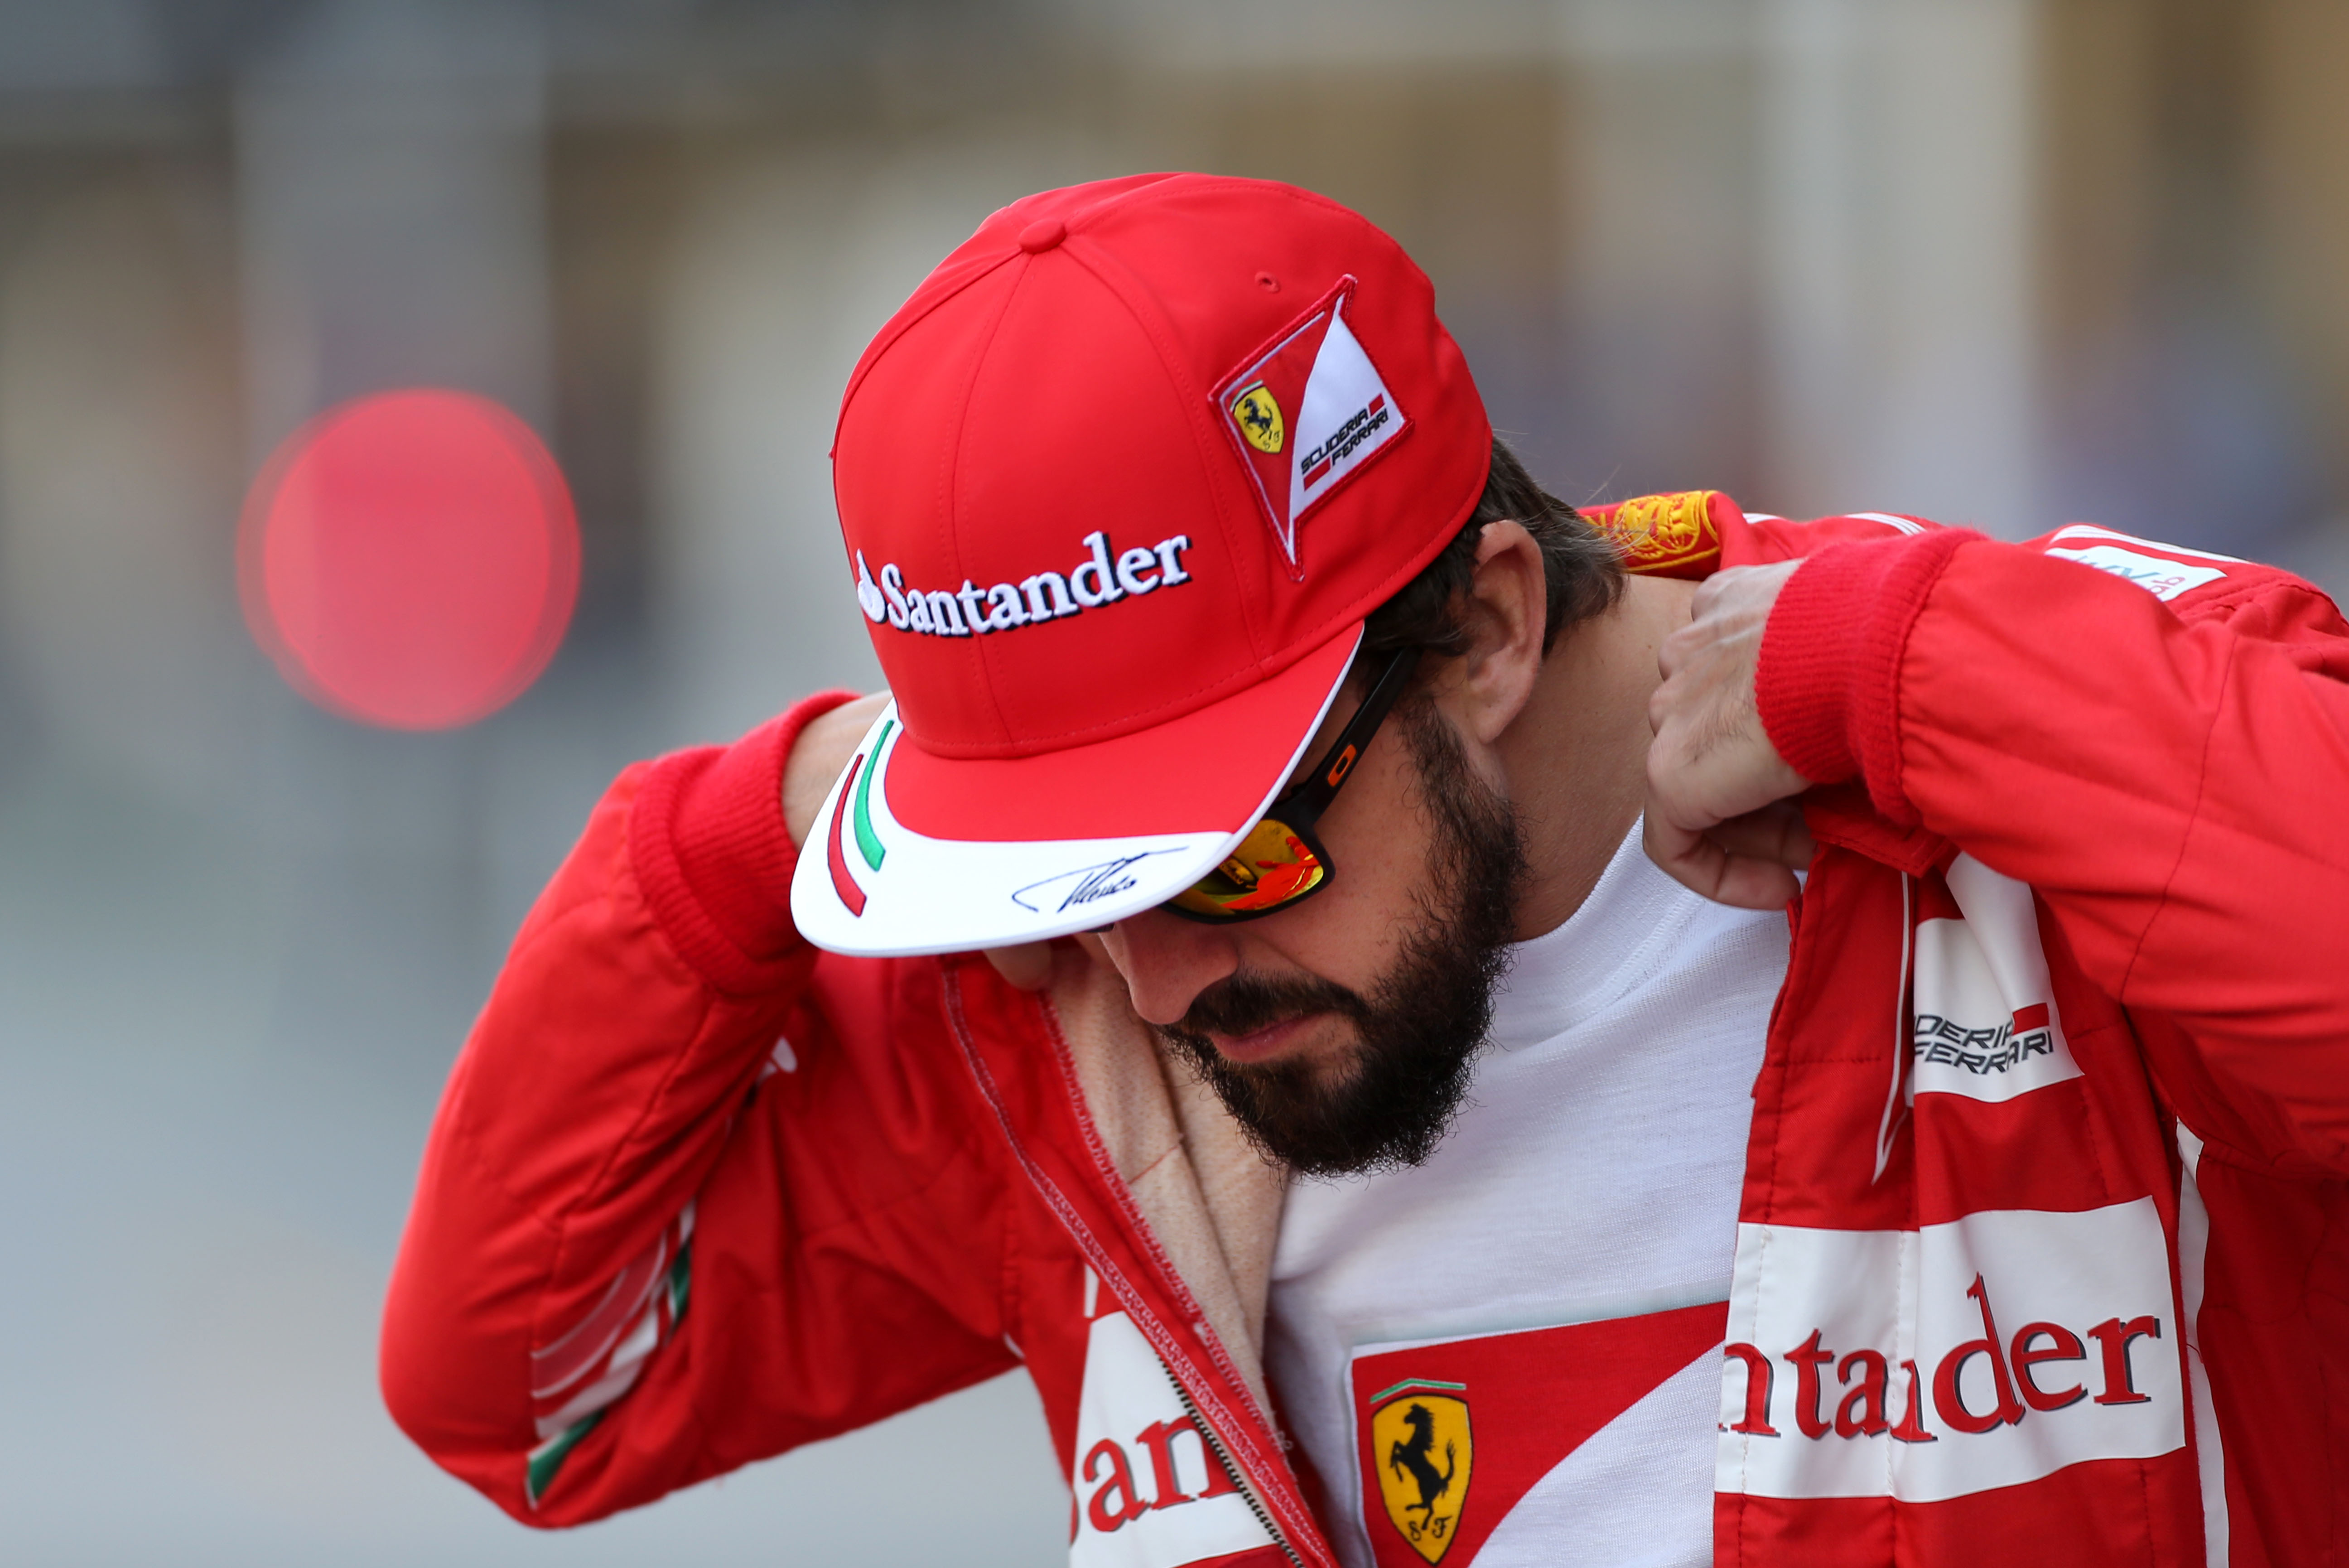 Alonso gaat uit van sterk Ferrari in 2015